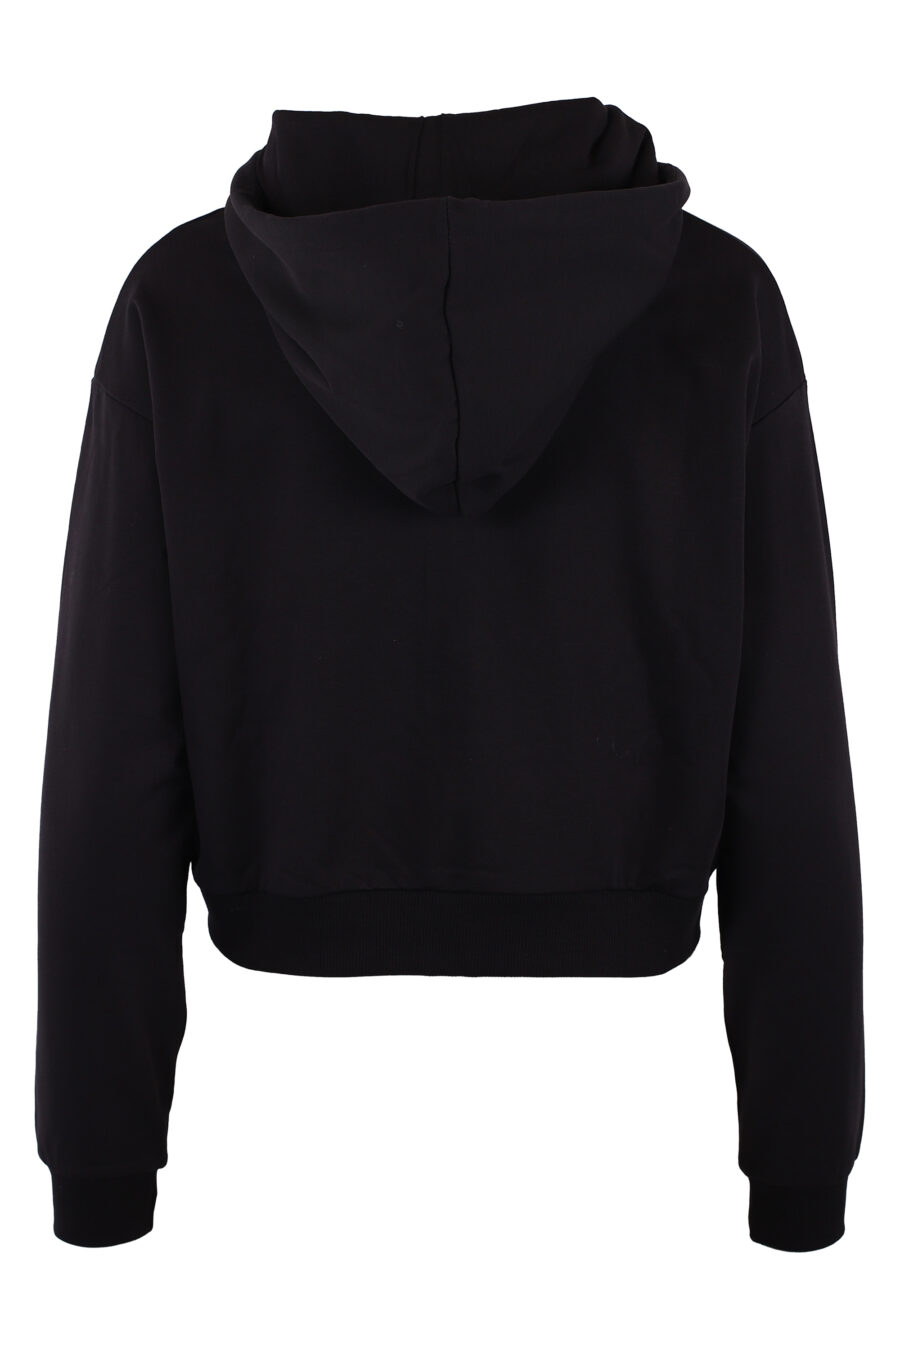 Black hooded sweatshirt with zip and bear logo "underbear" - IMG 6205